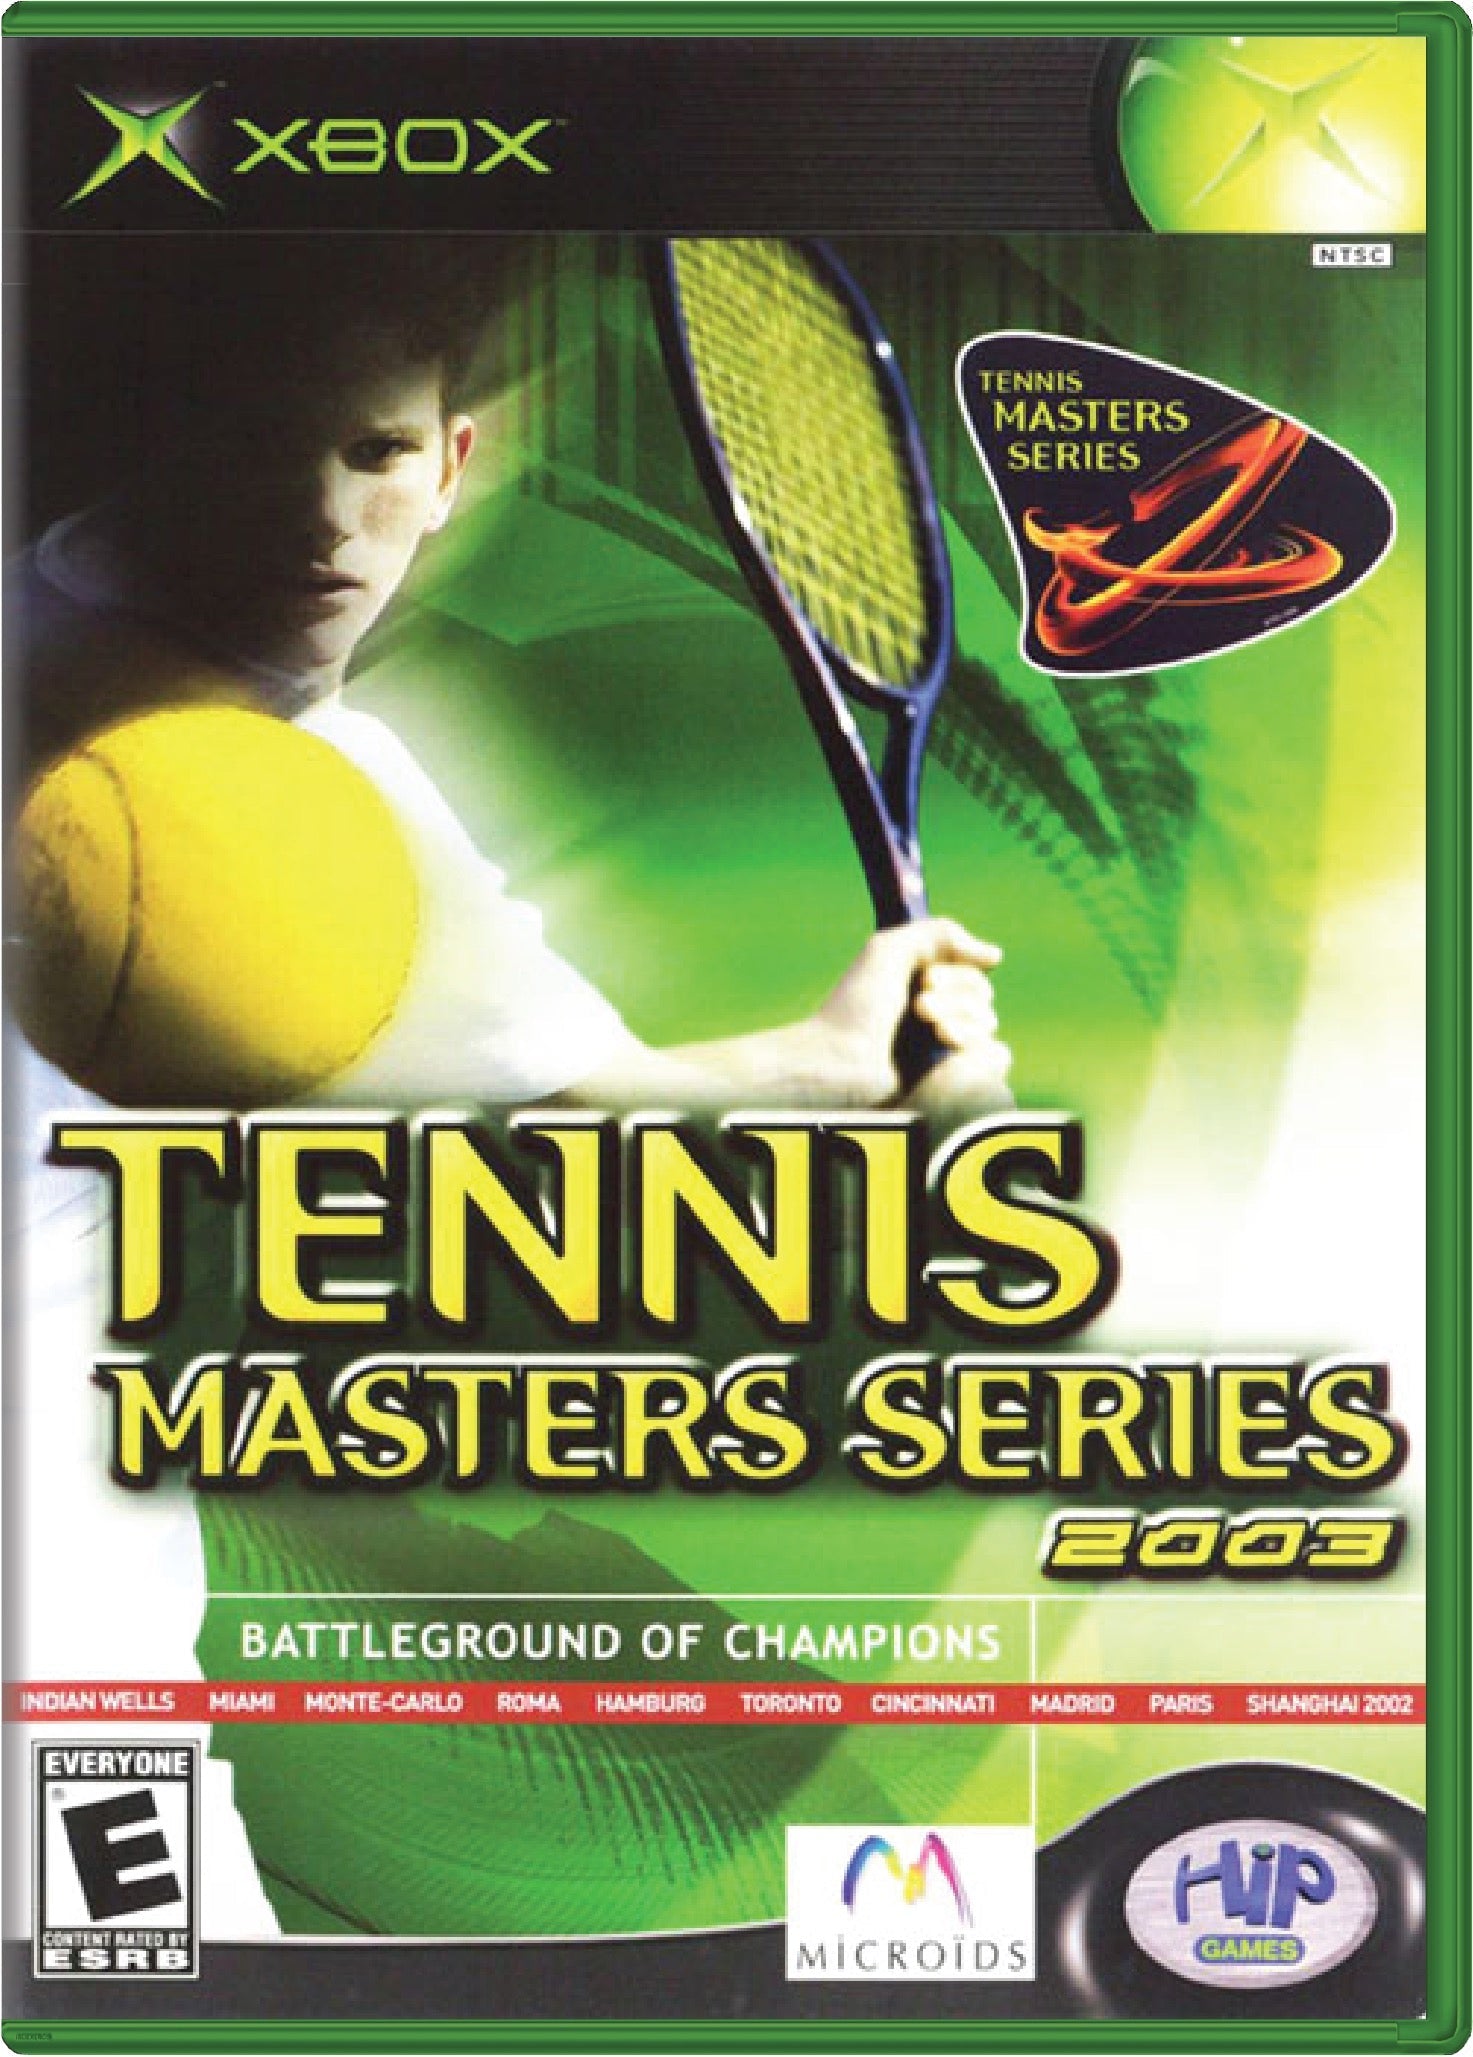 Tennis Masters Series 2003 Cover Art